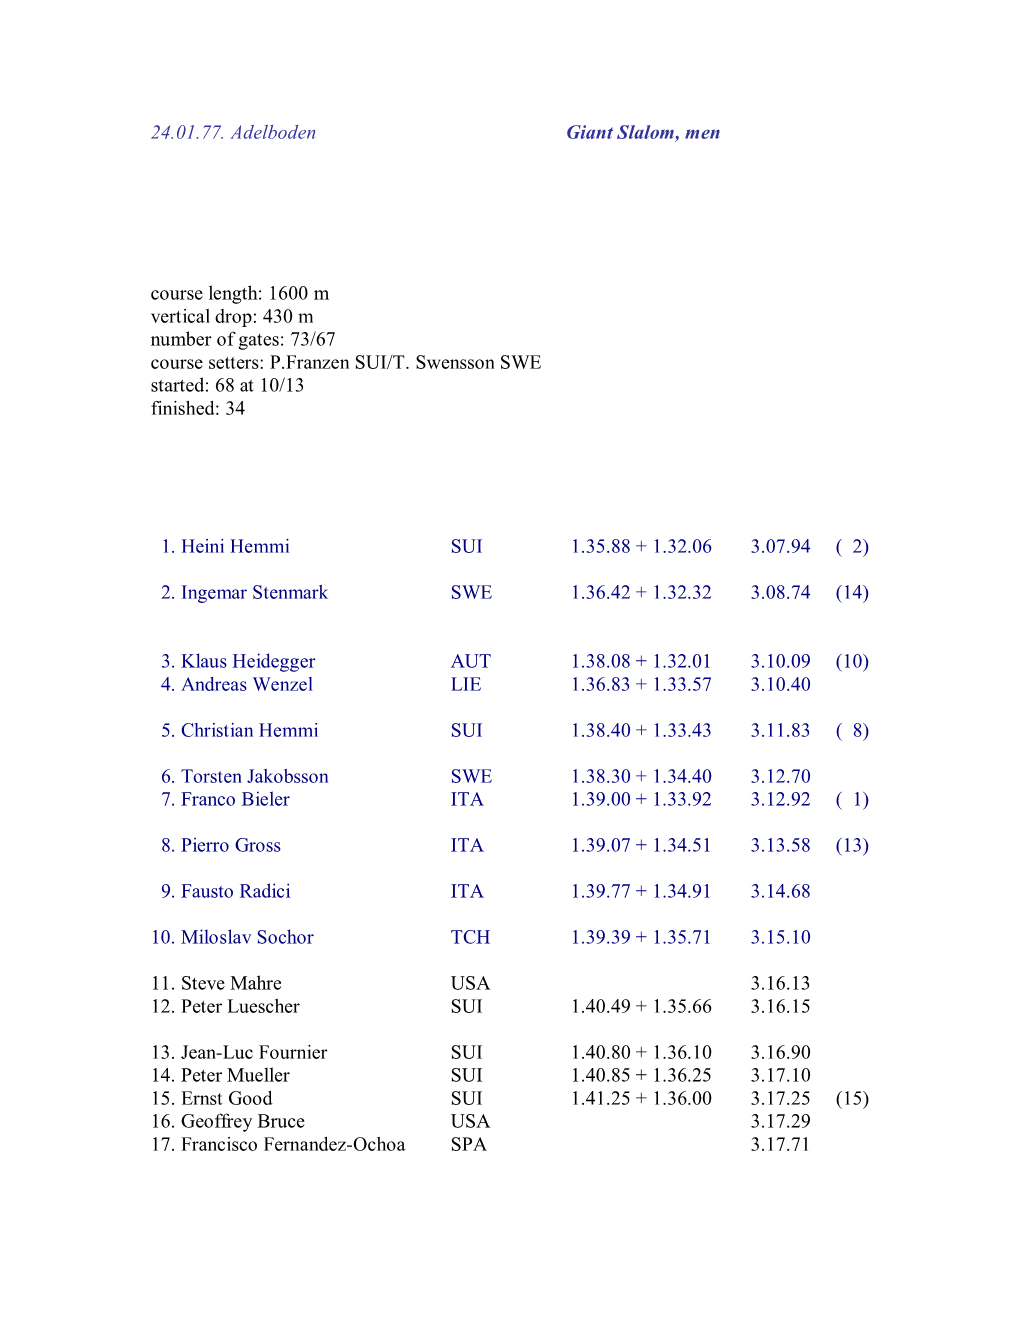 24.01.77. Adelboden Giant Slalom, Men Course Length: 1600 M Vertical